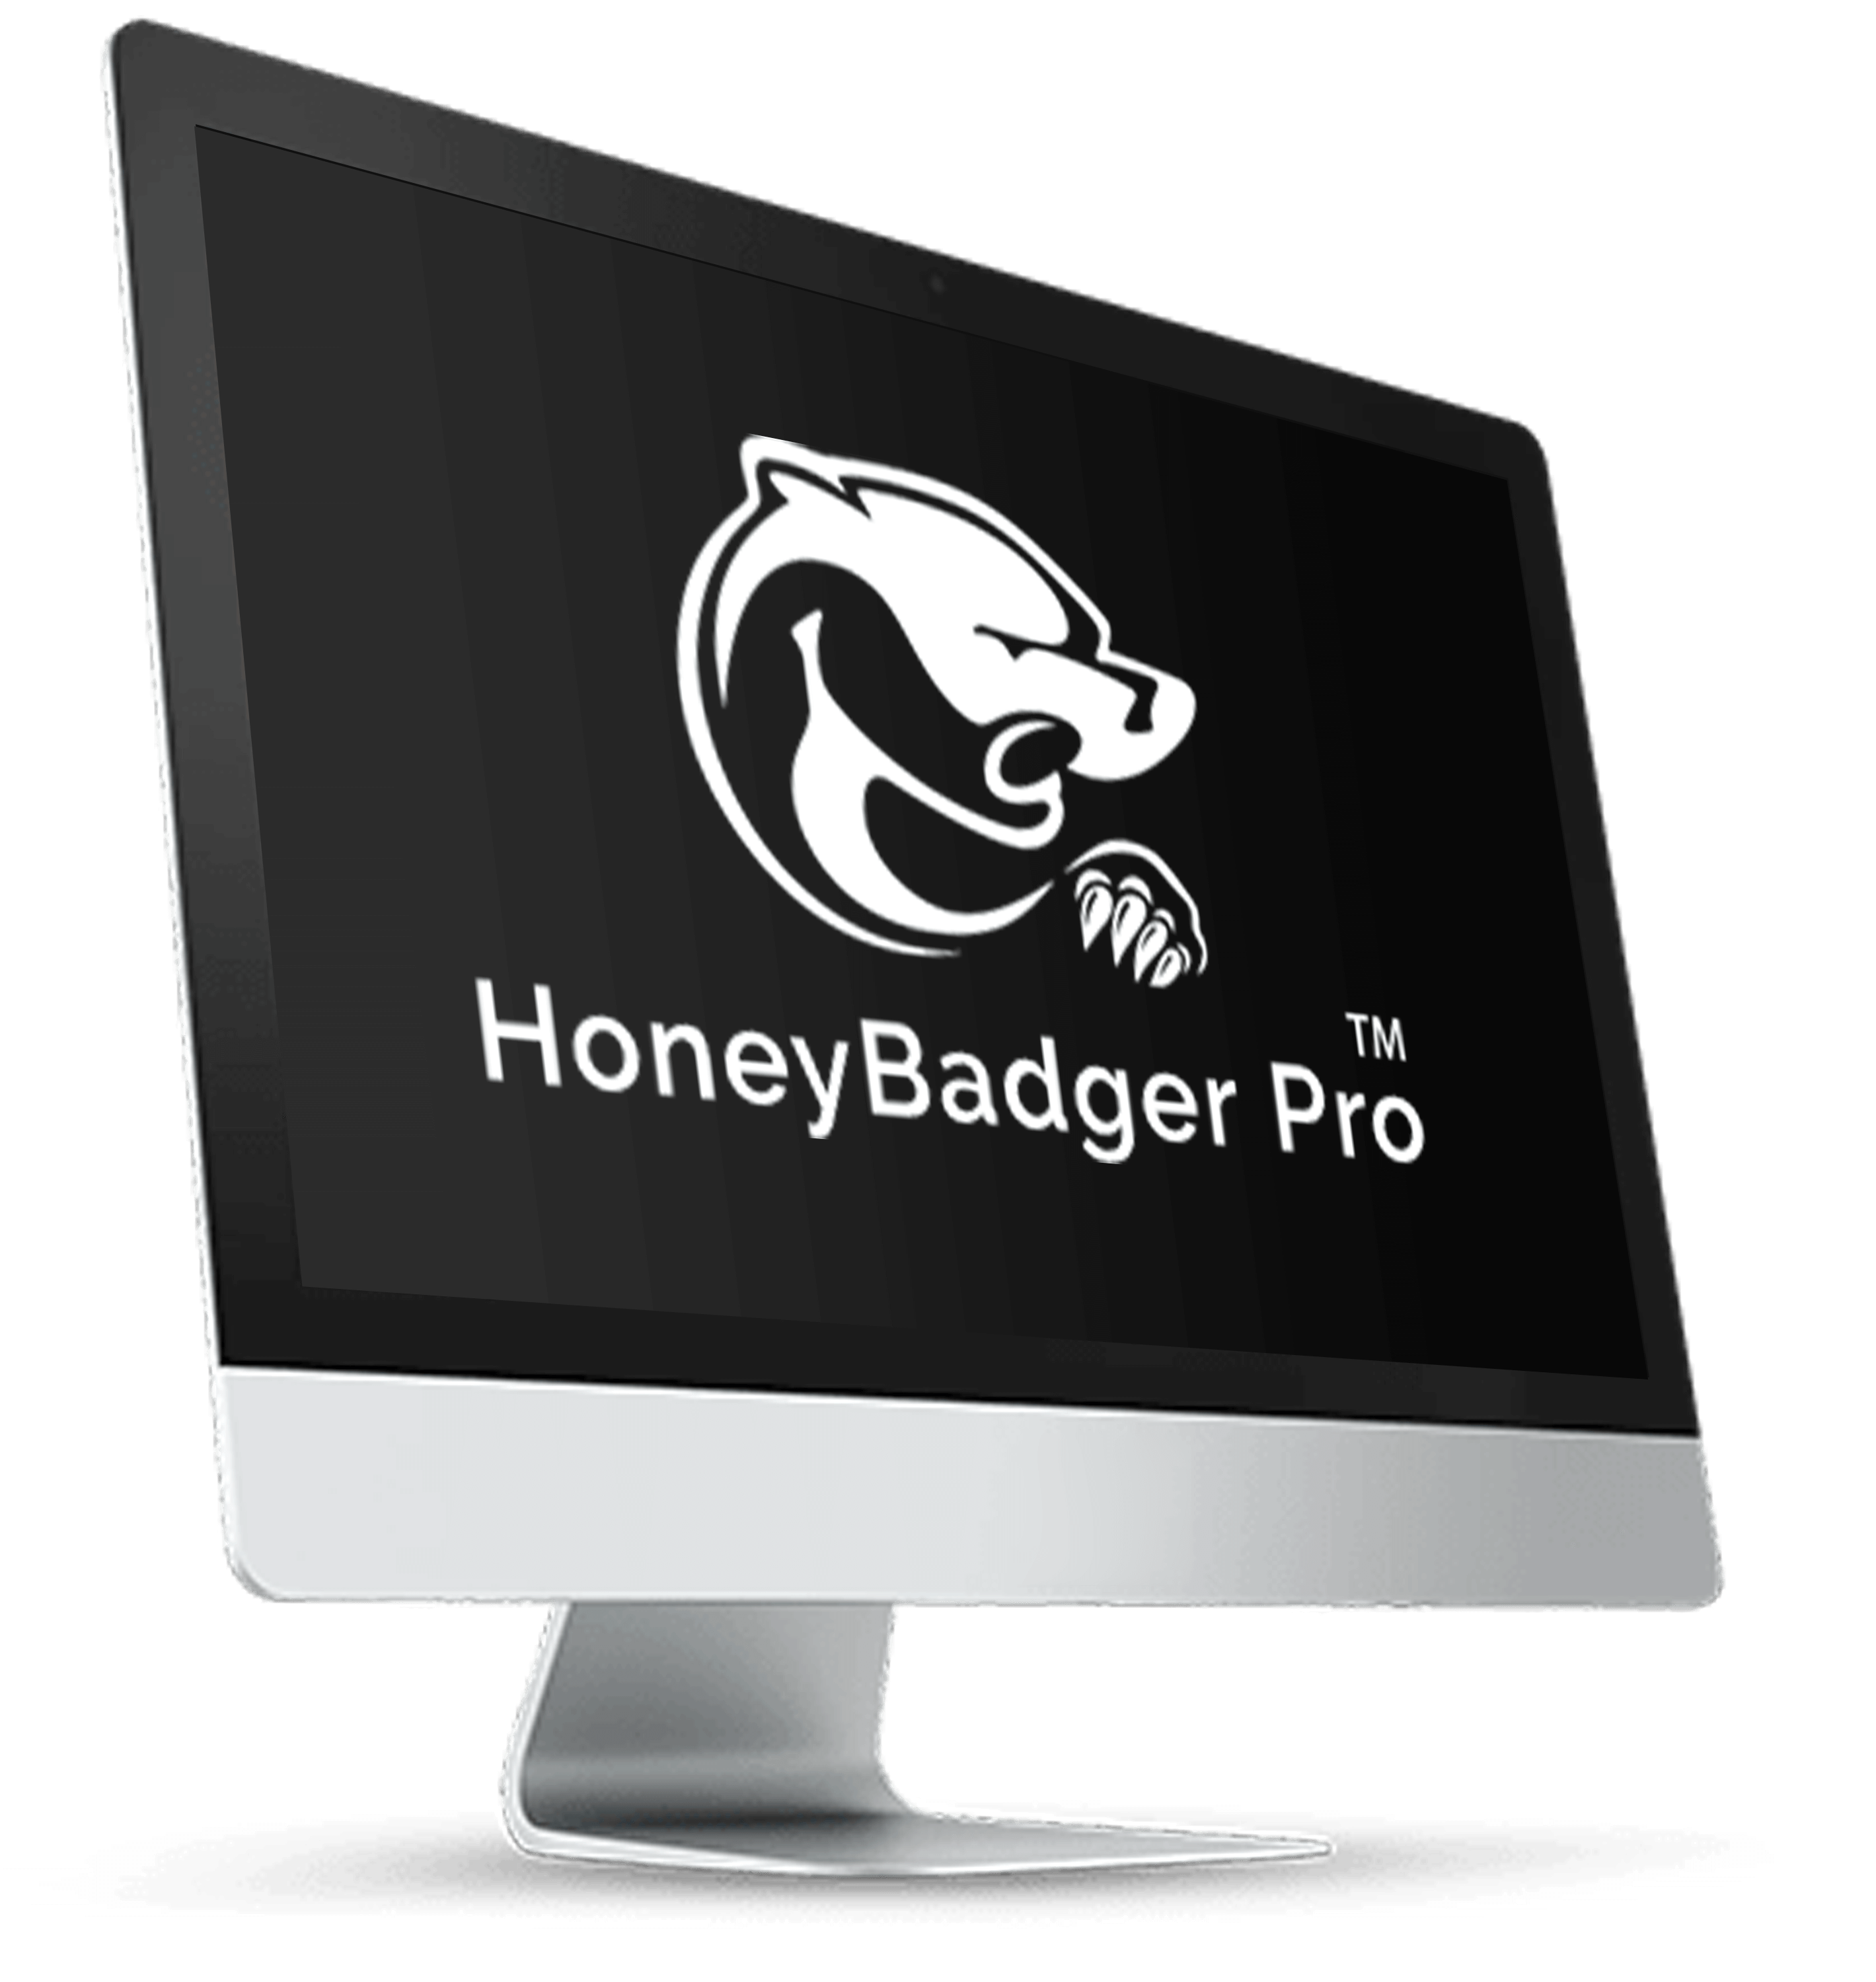 HoneyBadger Pro logo on screen